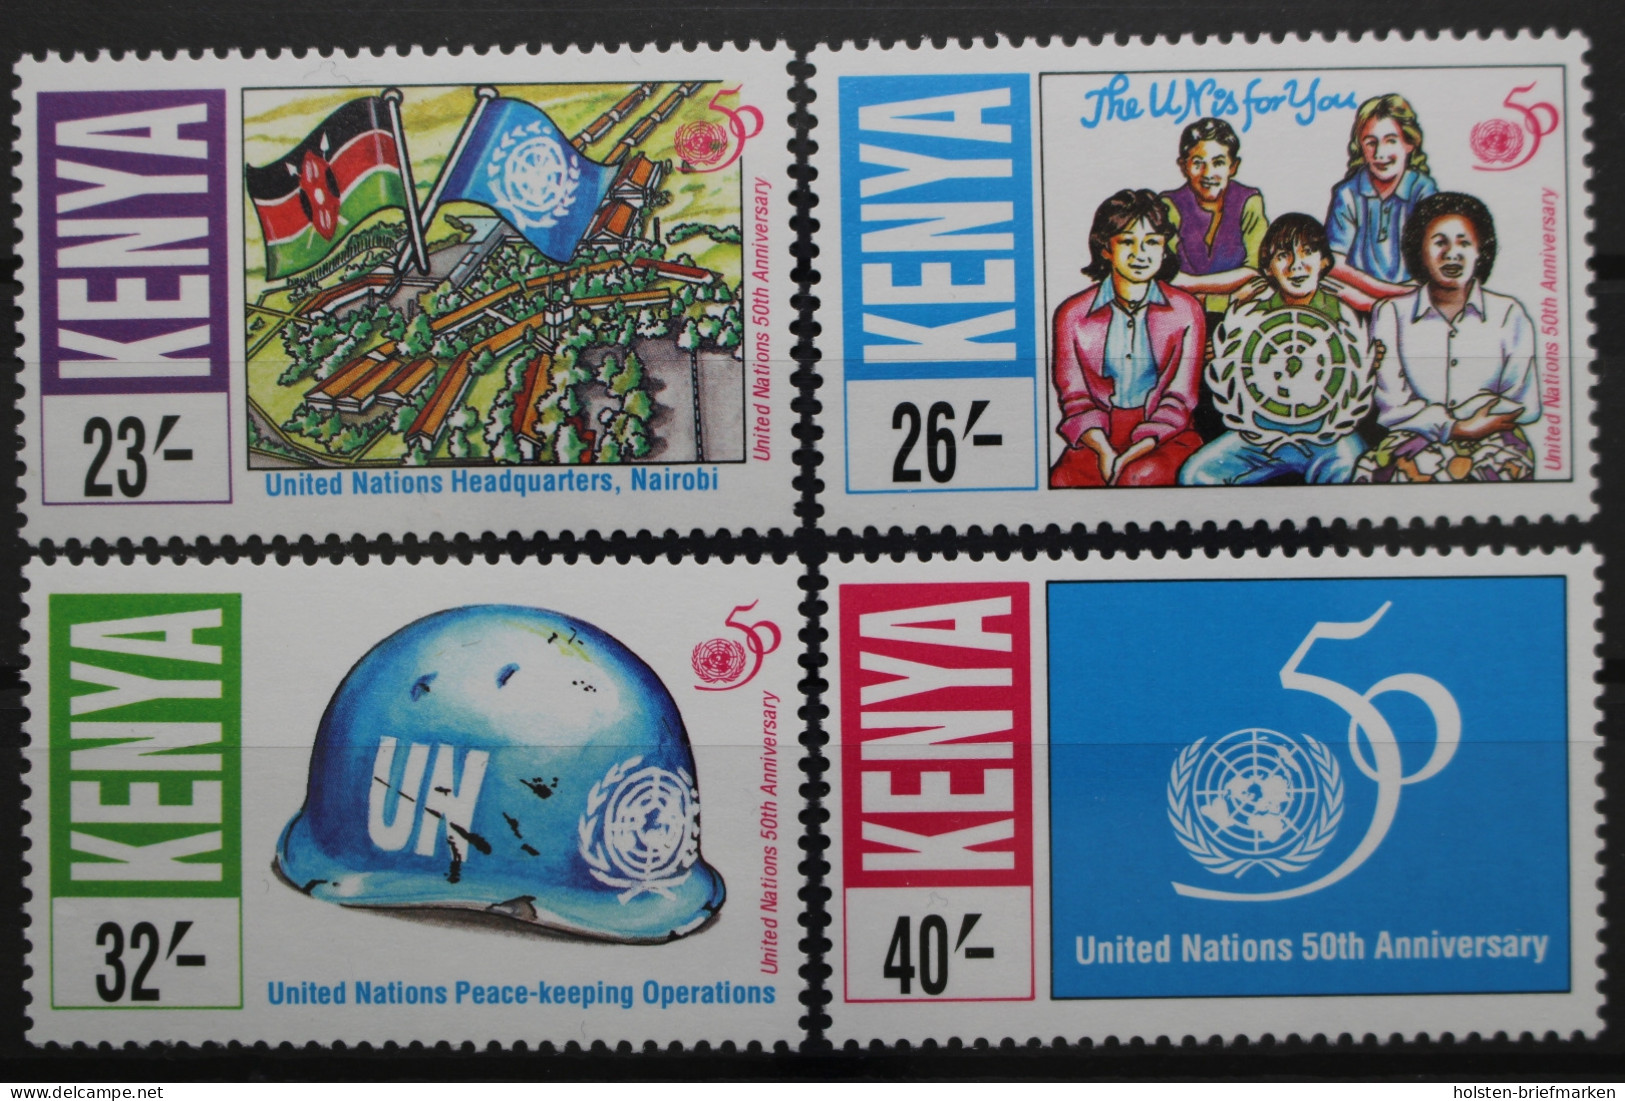 Kenia, MiNr. 636-639, Postfrisch - Kenia (1963-...)